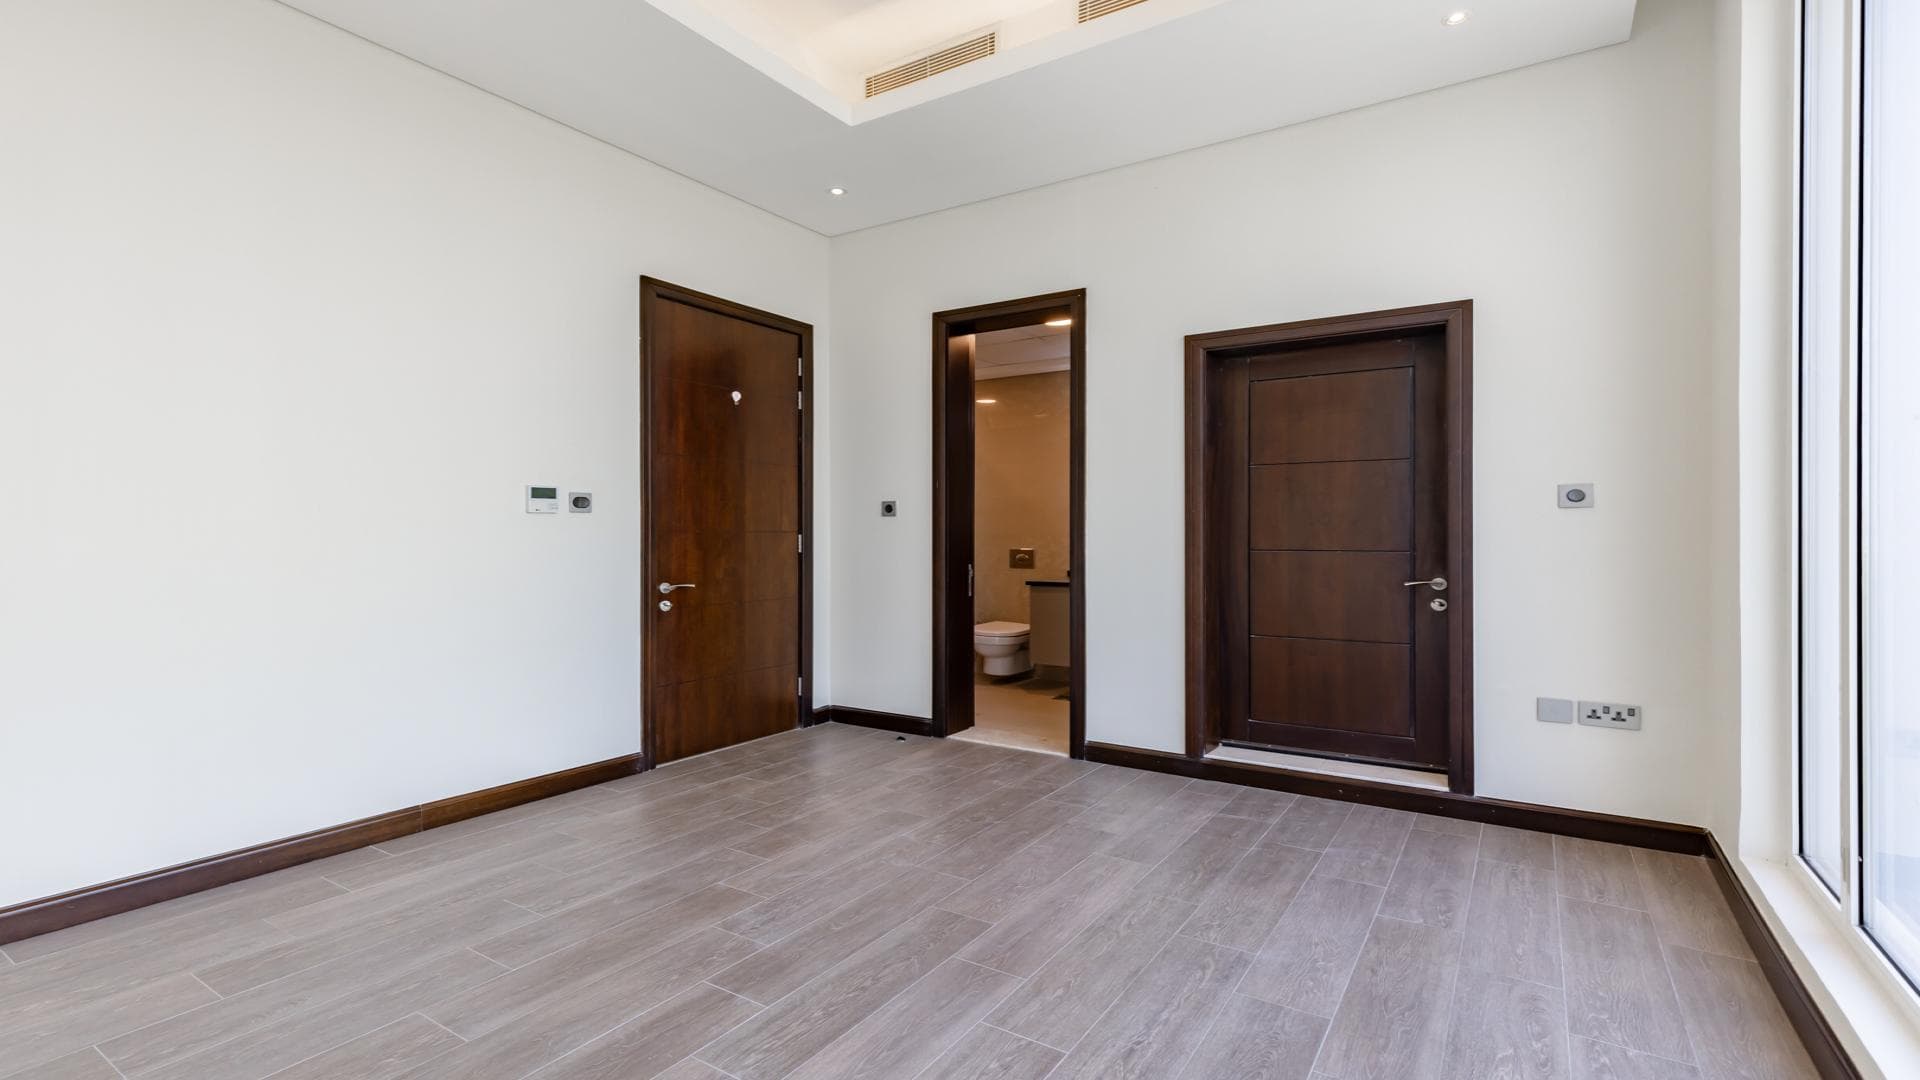 4 Bedroom Villa For Rent Hillside At Jumeirah Golf Estates Lp38024 2ebf59a2999d4e00.jpg